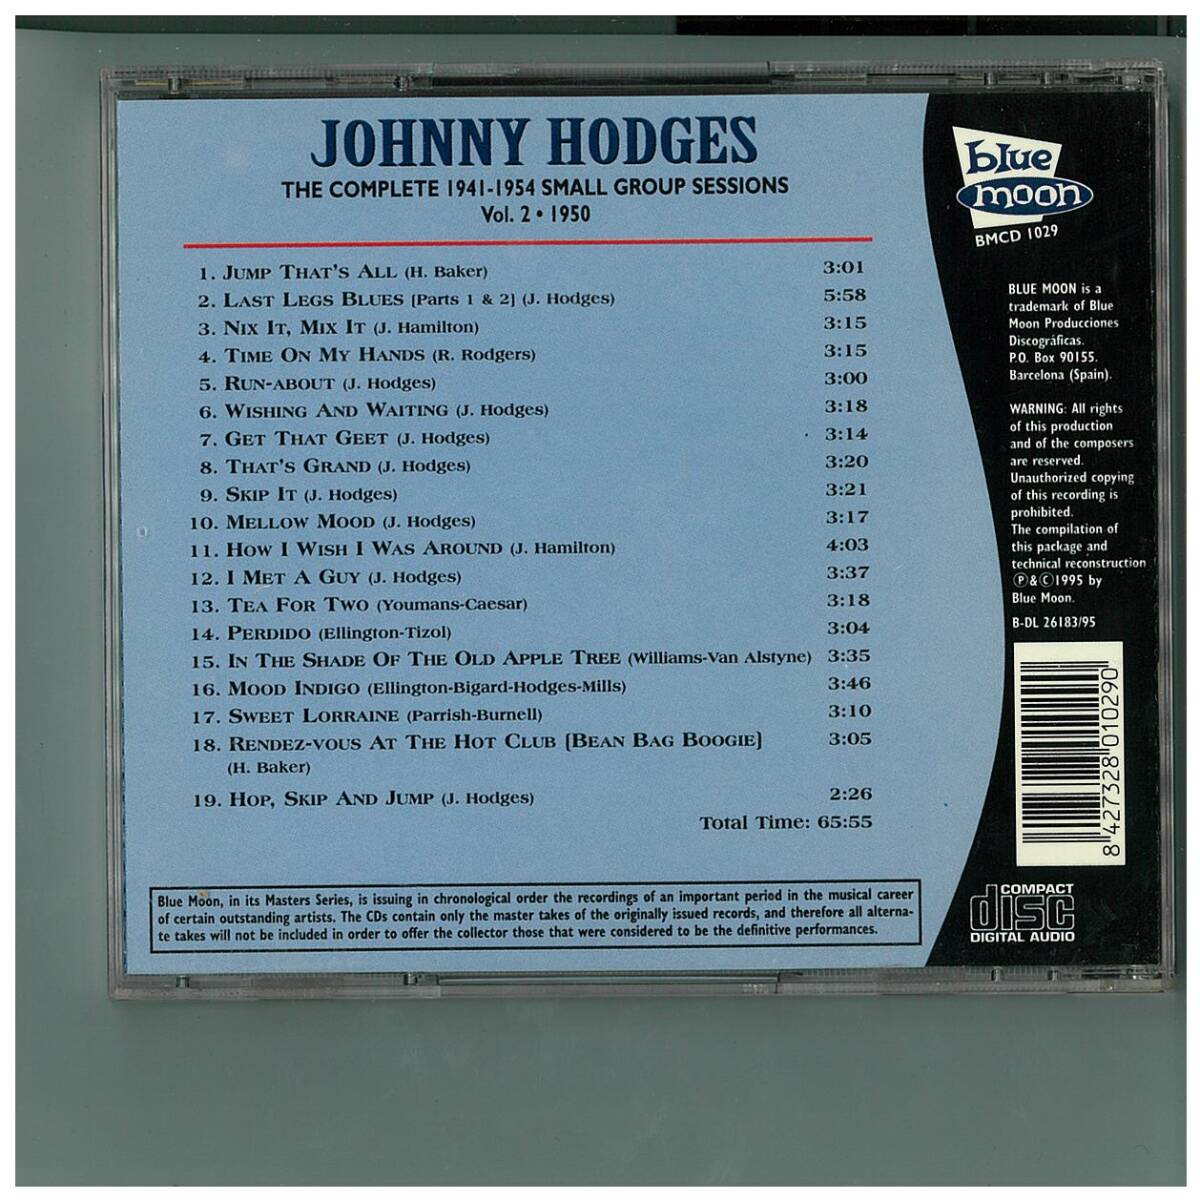 CD☆Johnny Hodges☆Vol.2 1950☆ジョニー ホッジス☆Blue Moon☆スペイン盤☆BMCD 1029_画像2